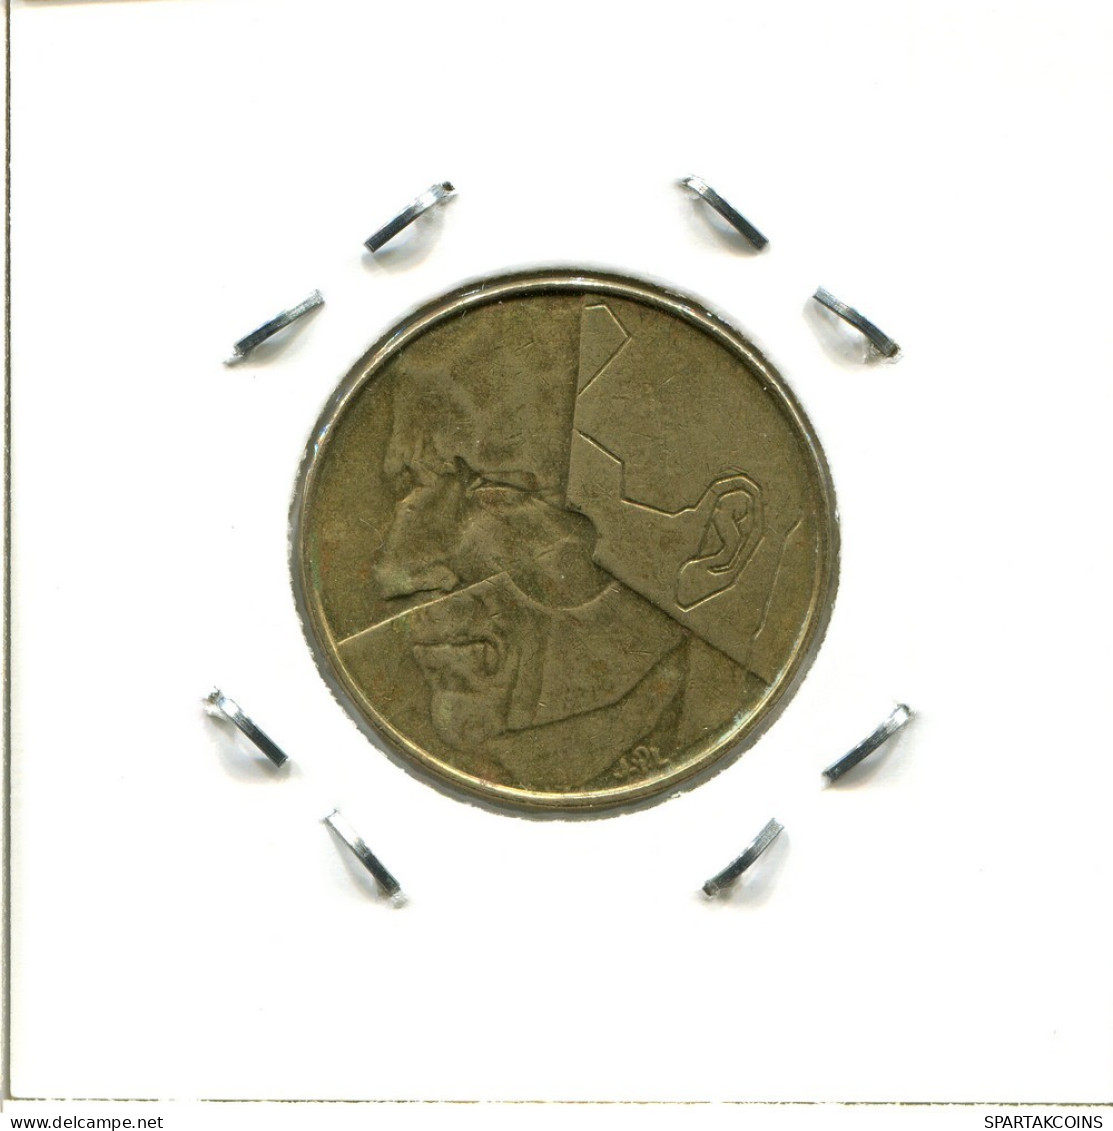 5 FRANCS 1993 FRENCH Text BÉLGICA BELGIUM Moneda #BA630.E.A - 5 Frank